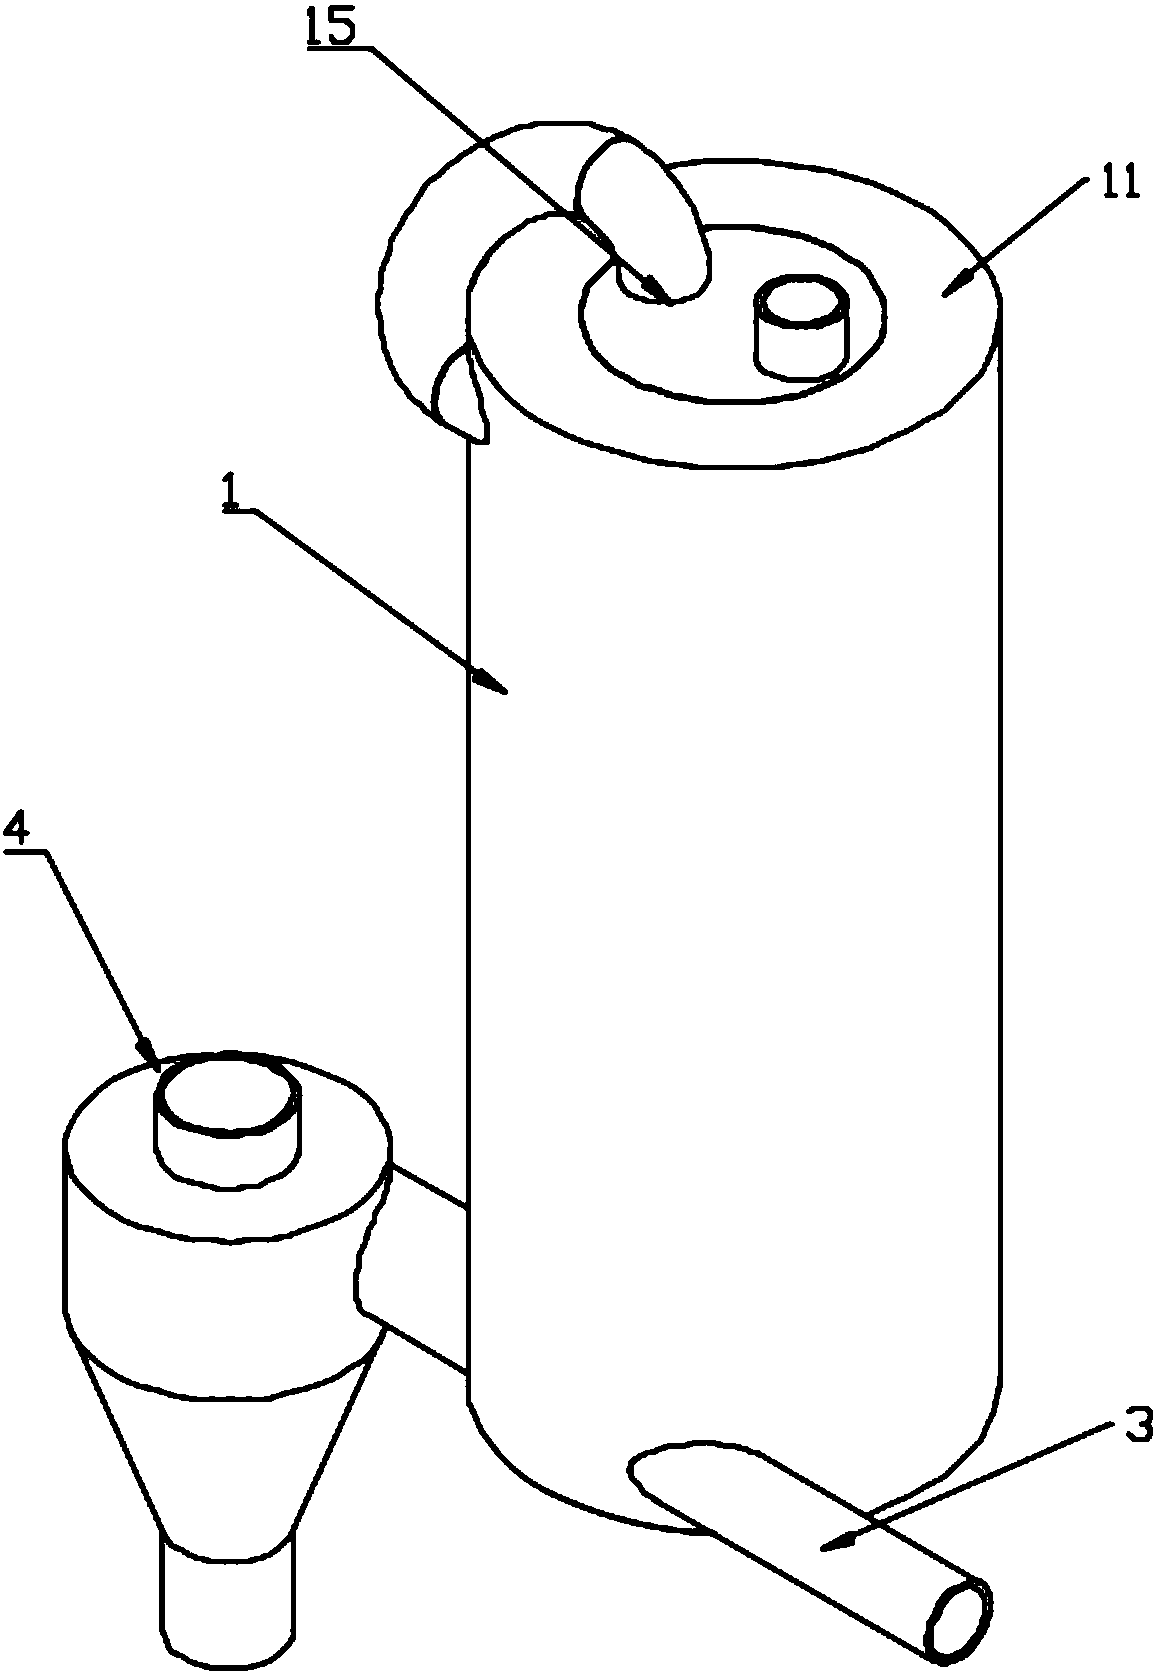 A negative pressure ignition separation device